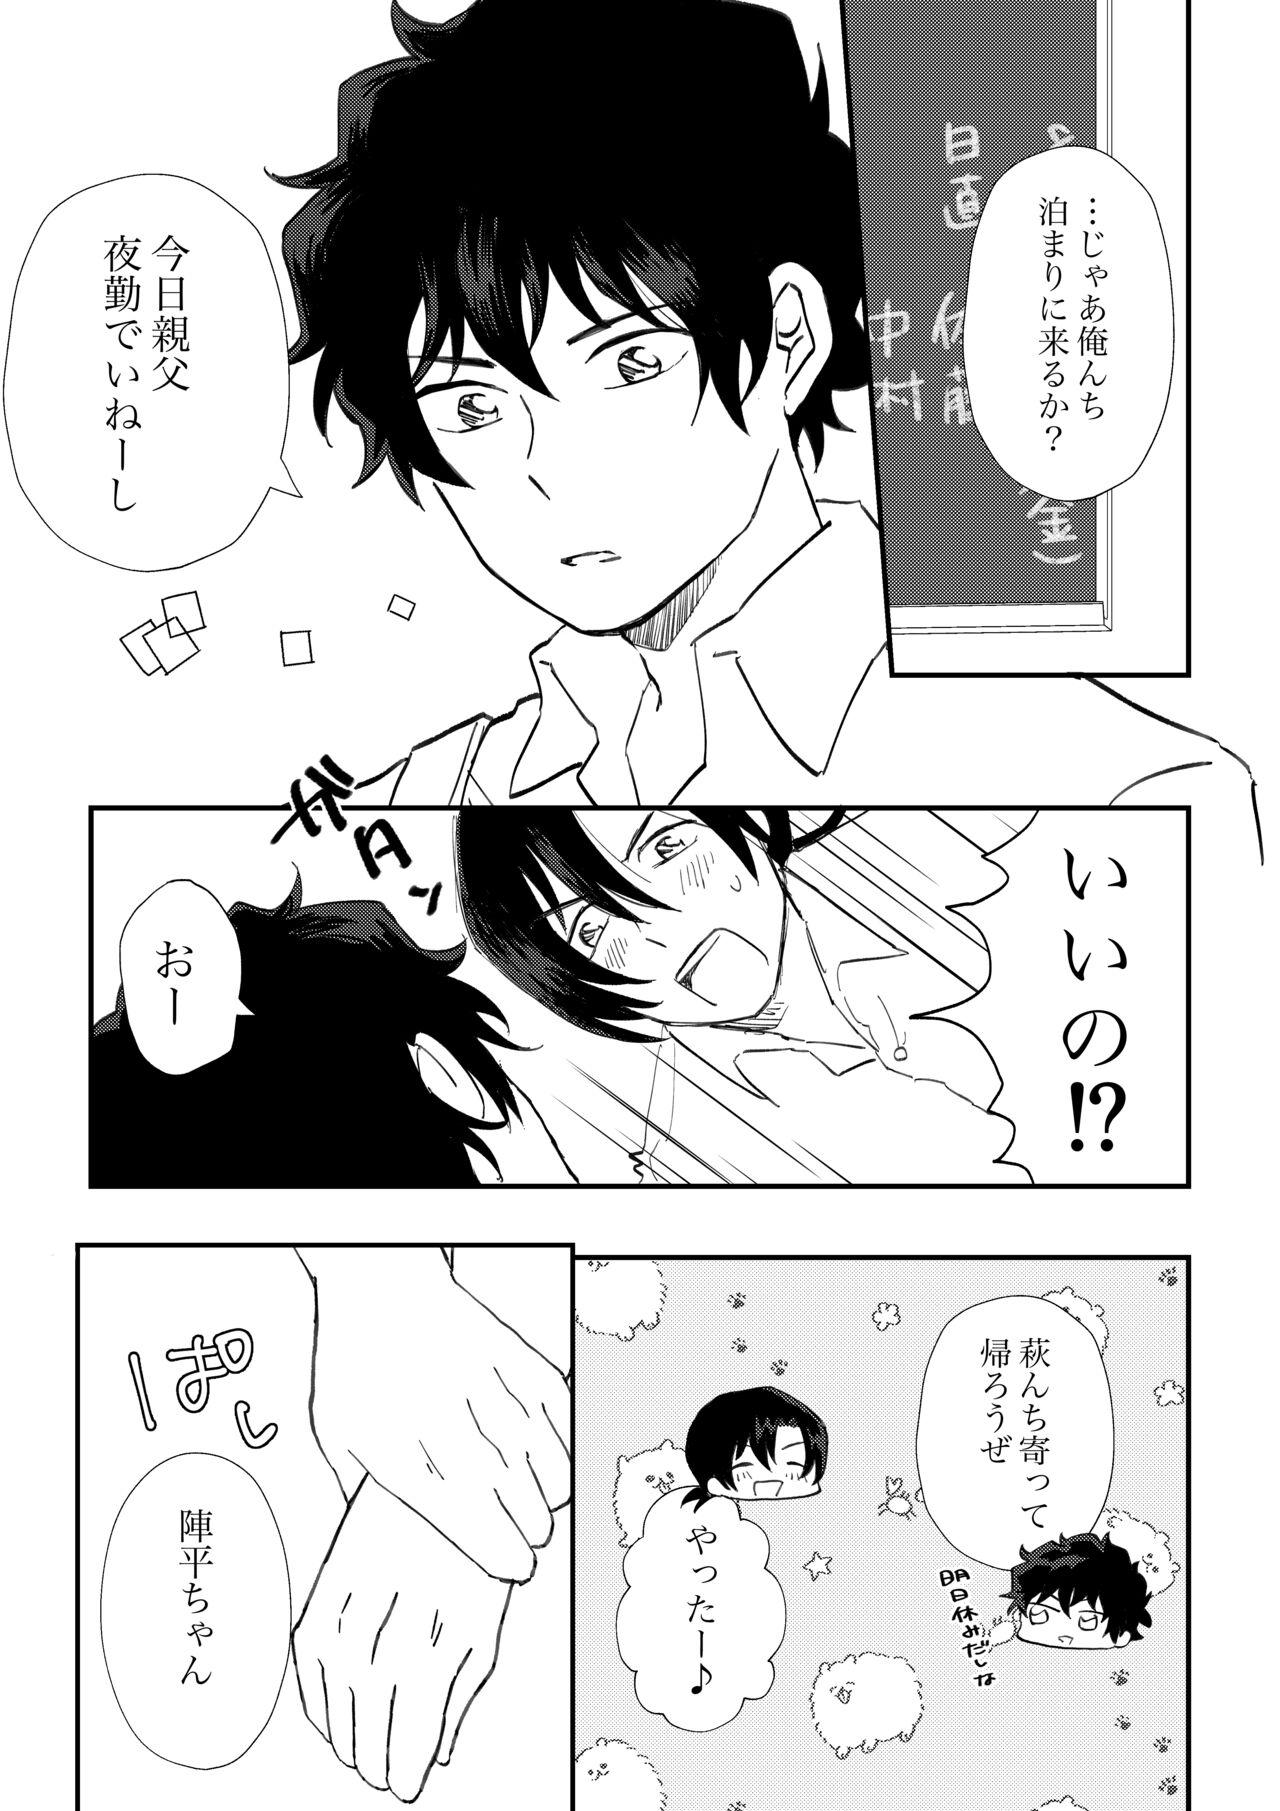 Weird All because of summer - Detective conan | meitantei conan Large - Page 8